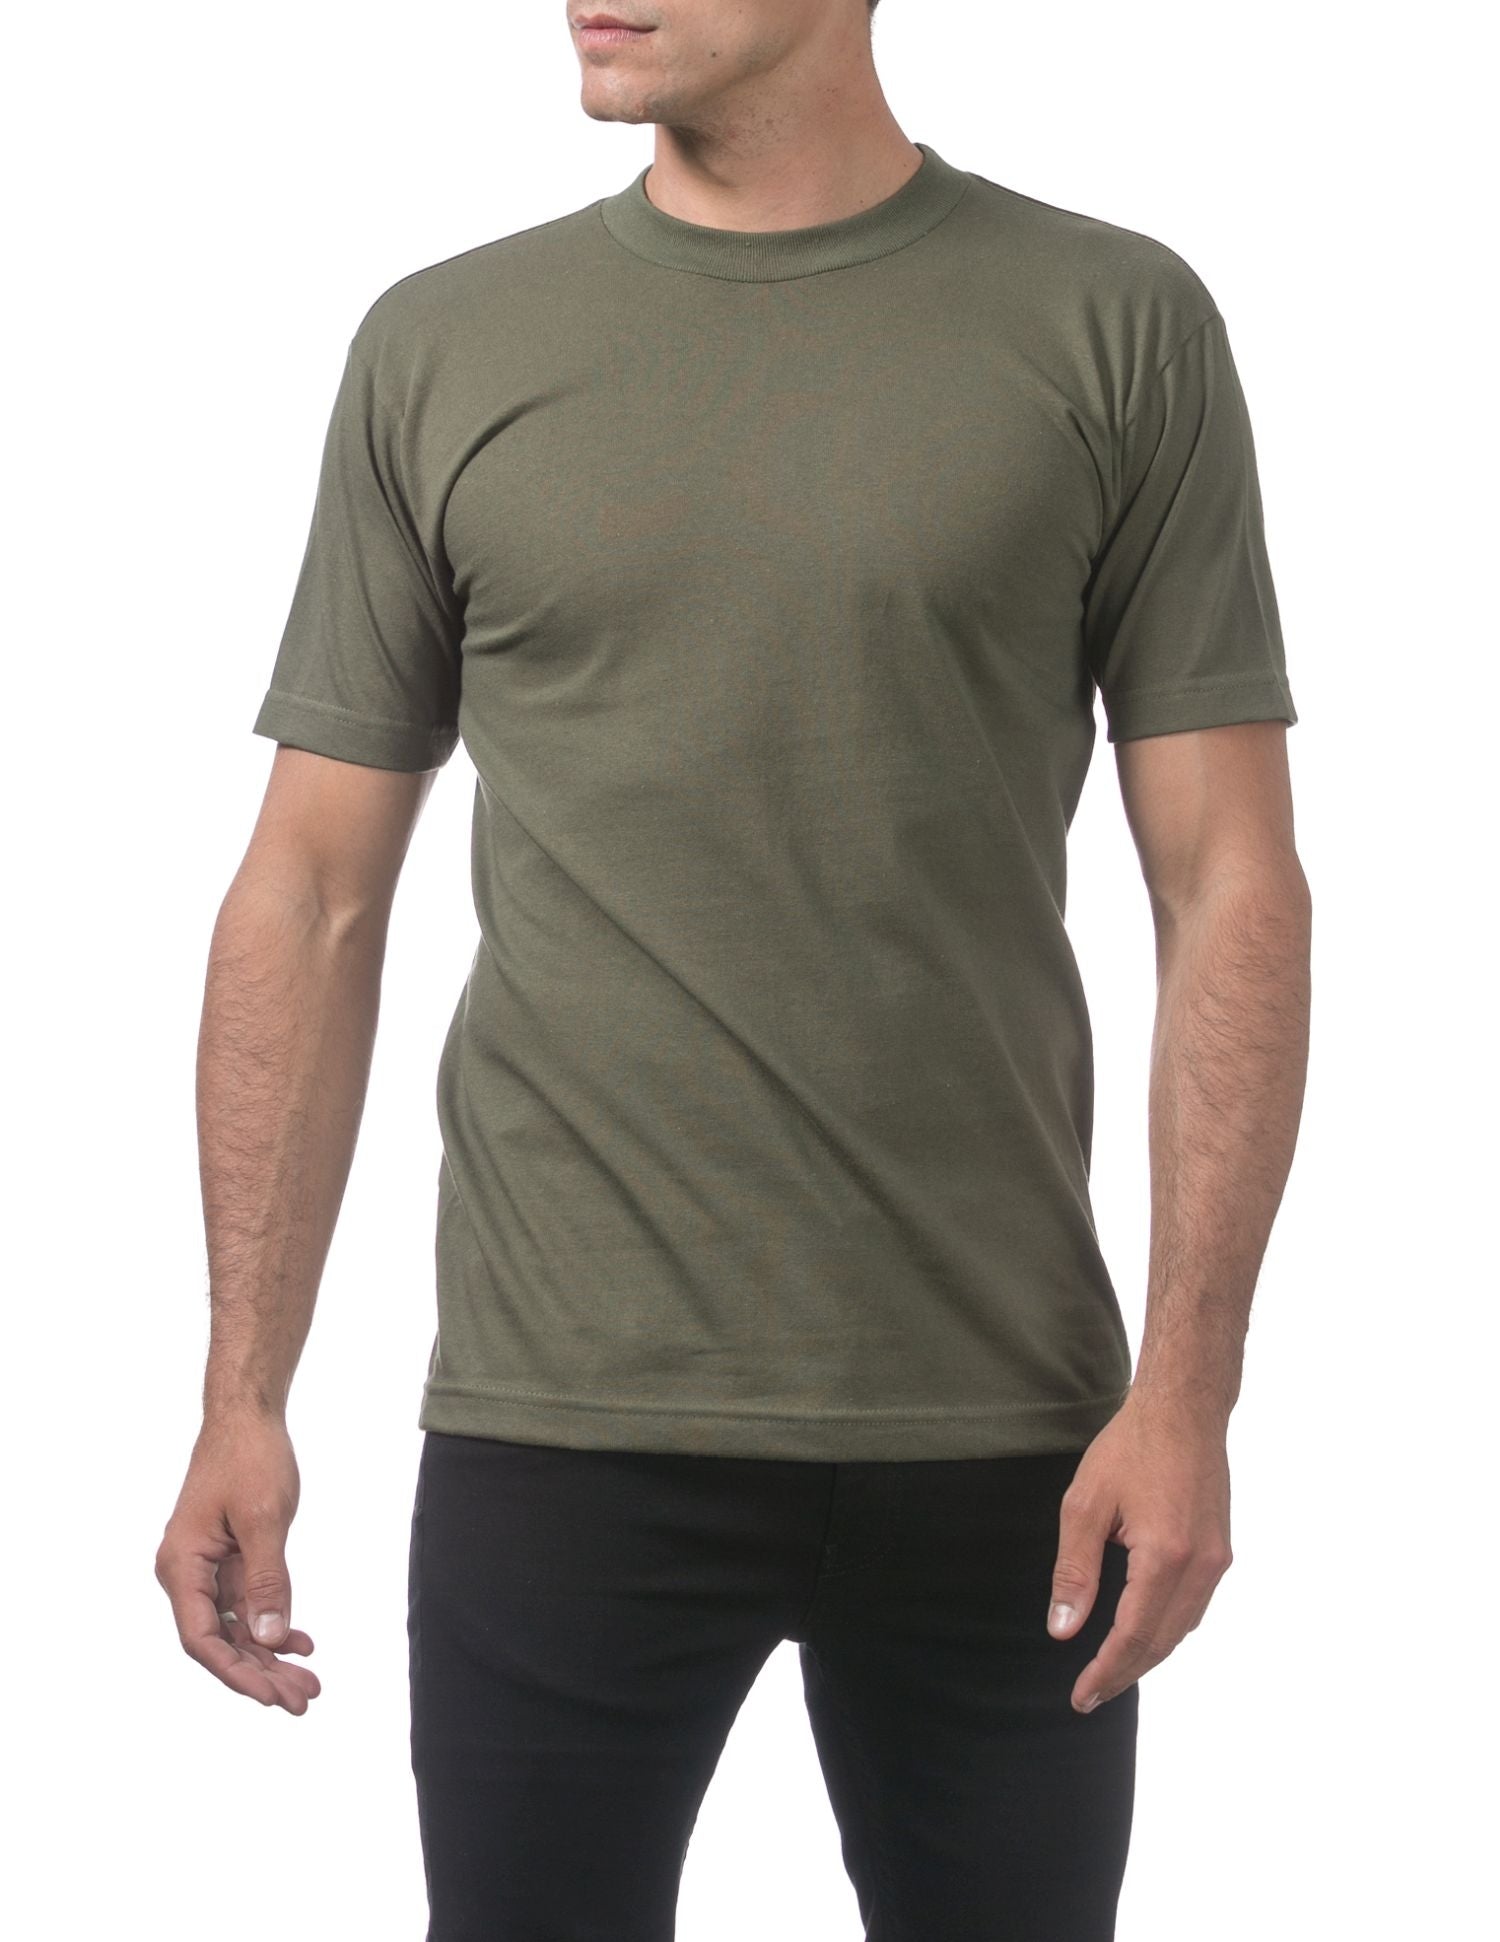 Pro Club Men's Comfort Cotton Short Sleeve T-Shirt - Olive Green - X-Large - Pro-Distributing